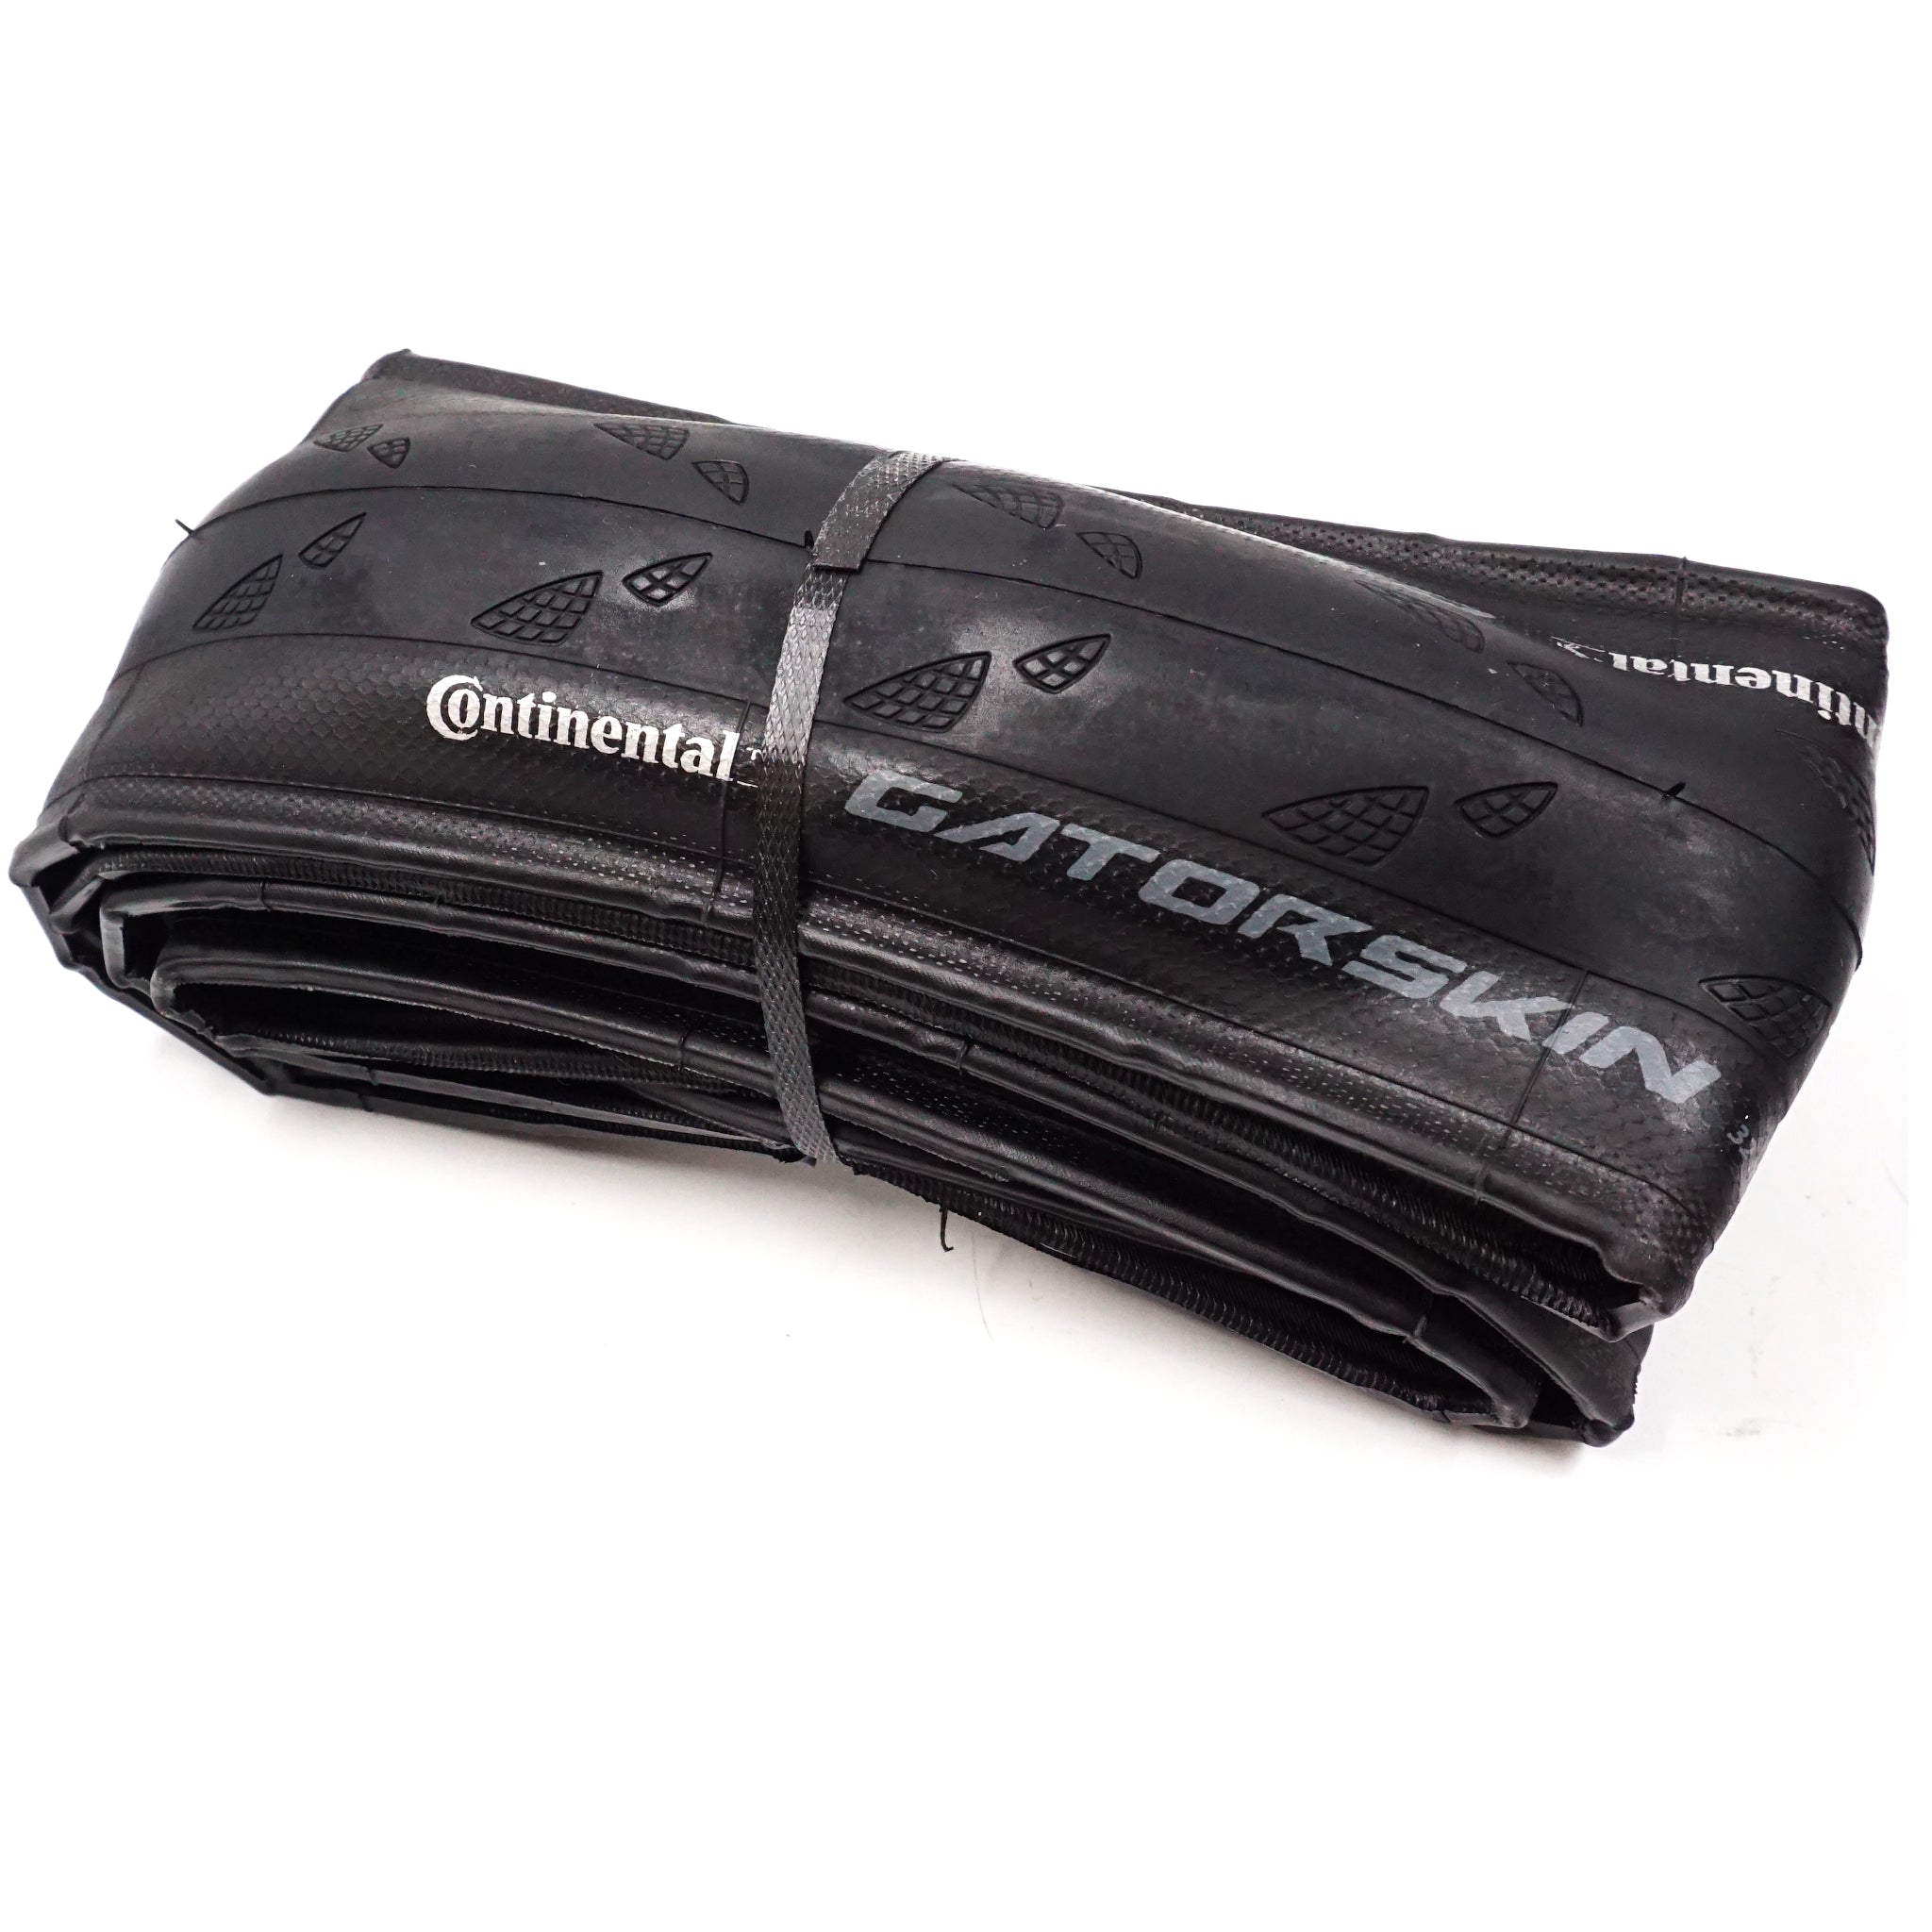 Continental Gatorskin Folding Tire - Special Black Edition - The Bikesmiths